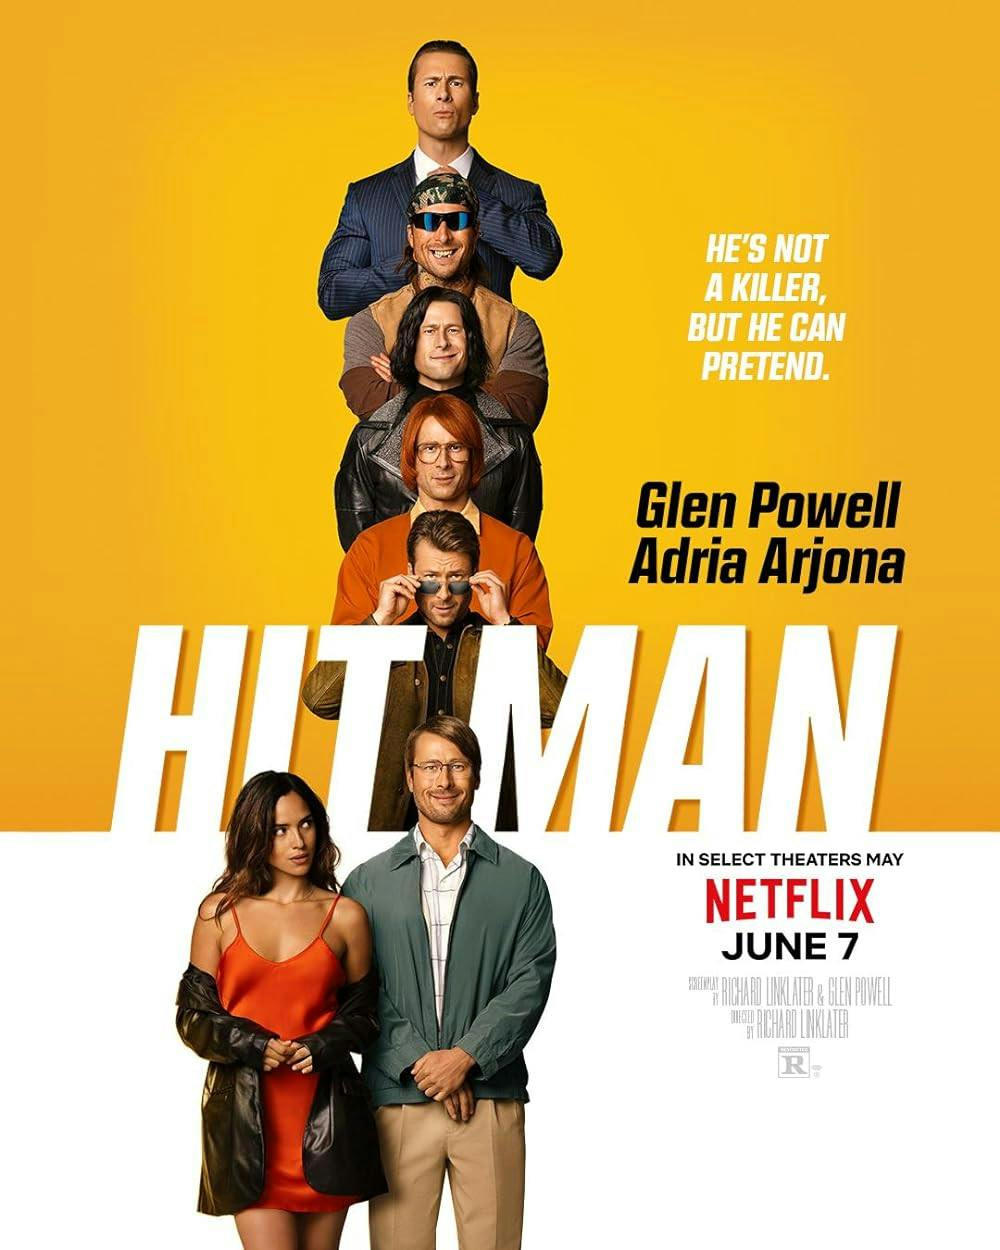 Hitman movie poster